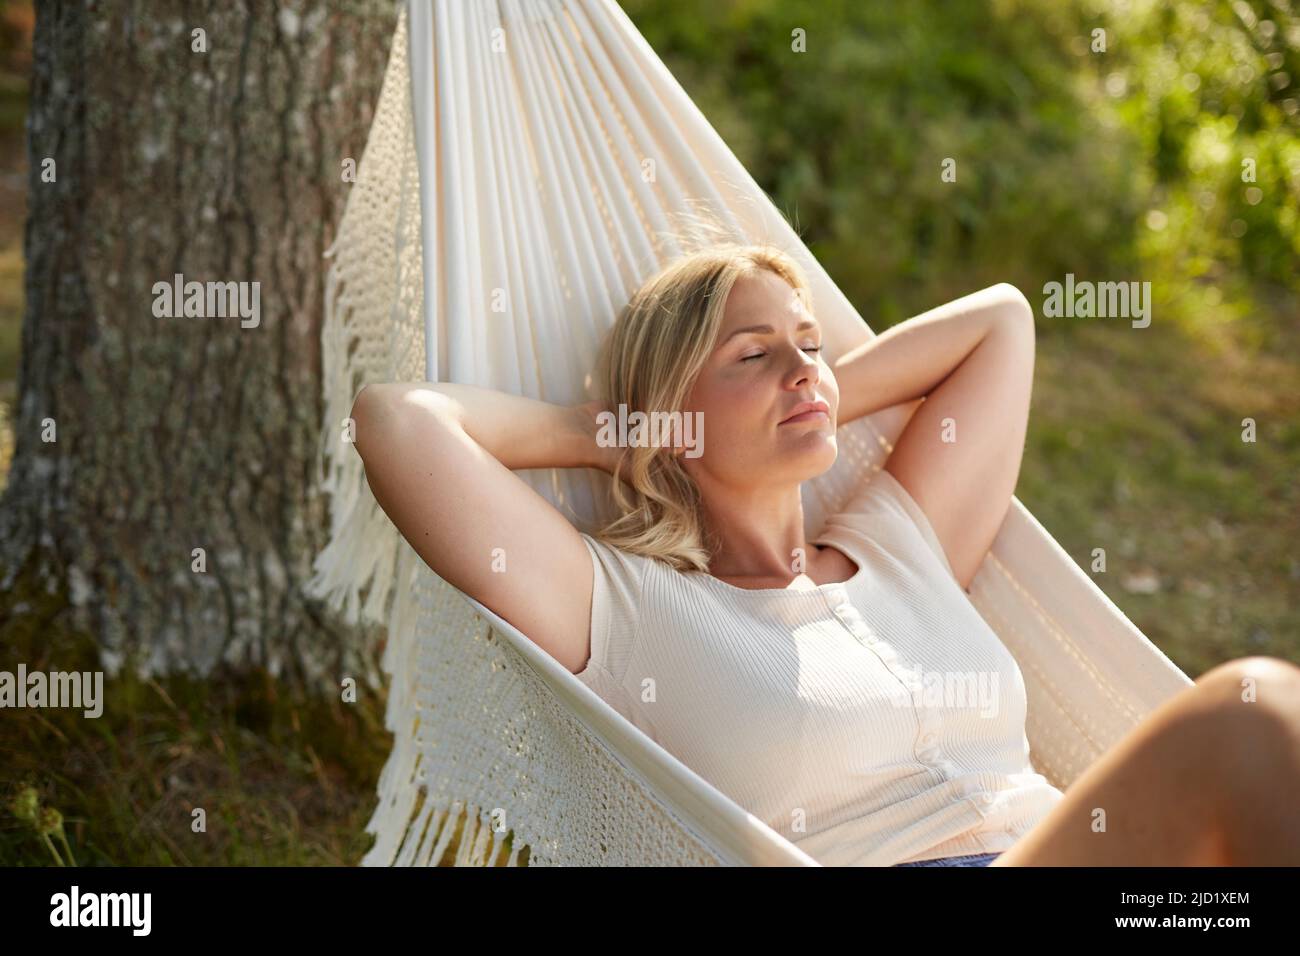 Woman relaxing on hammock Stock Photo